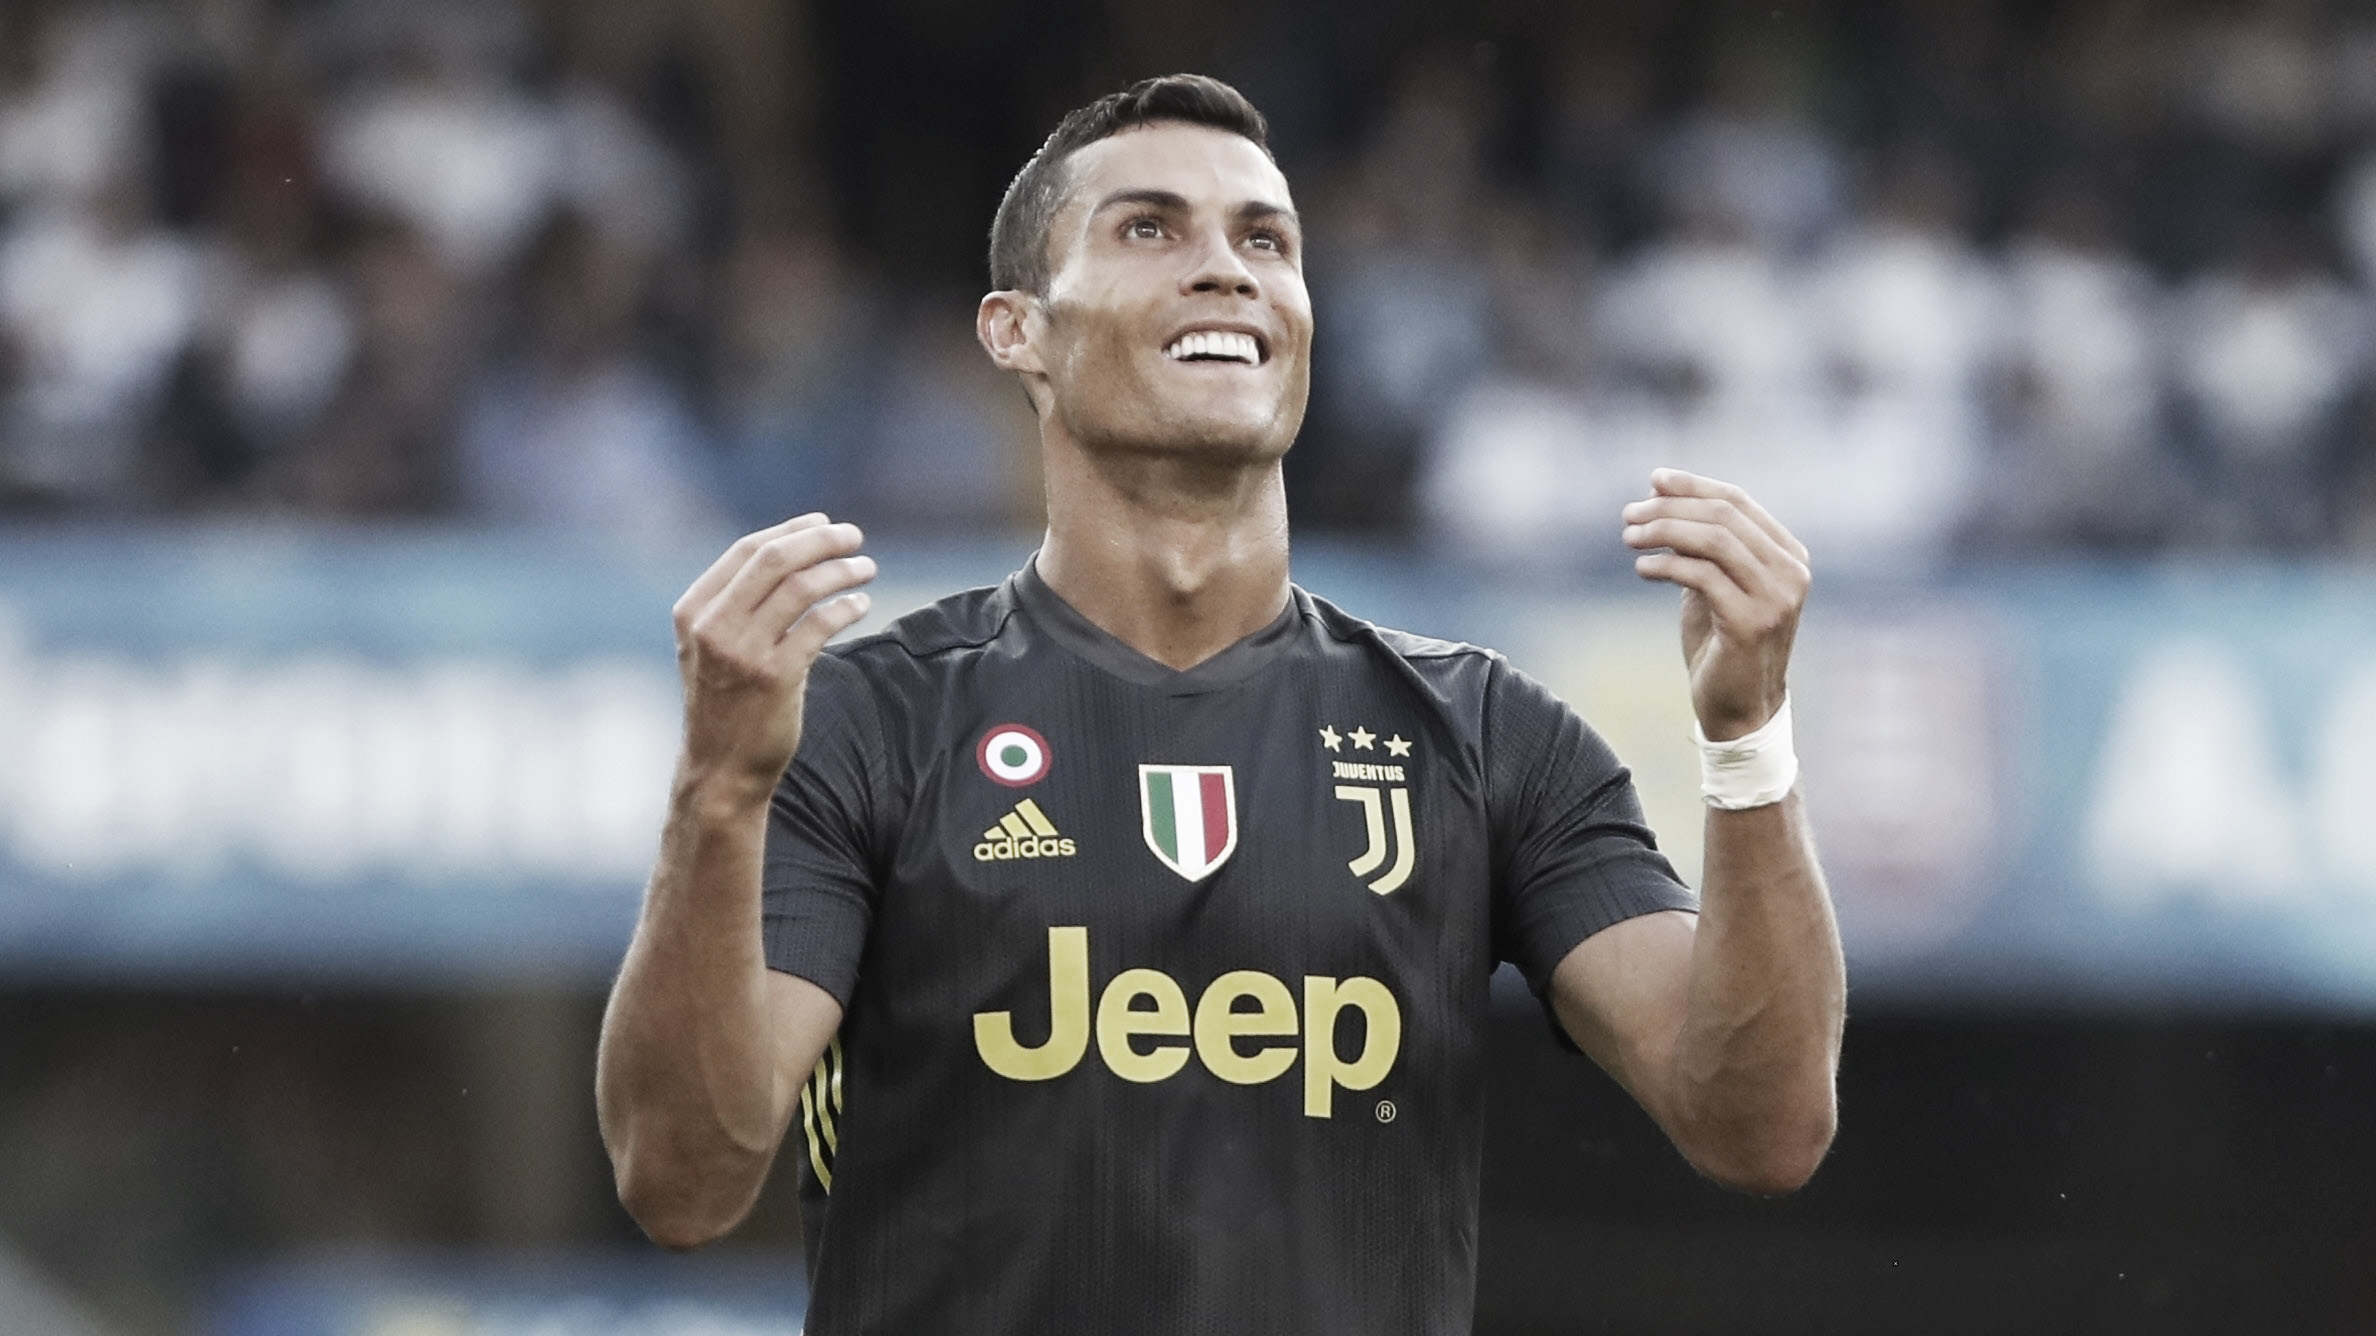 Best Cristiano Ronaldo Wallpaper Photos HD Cr7 Edigital